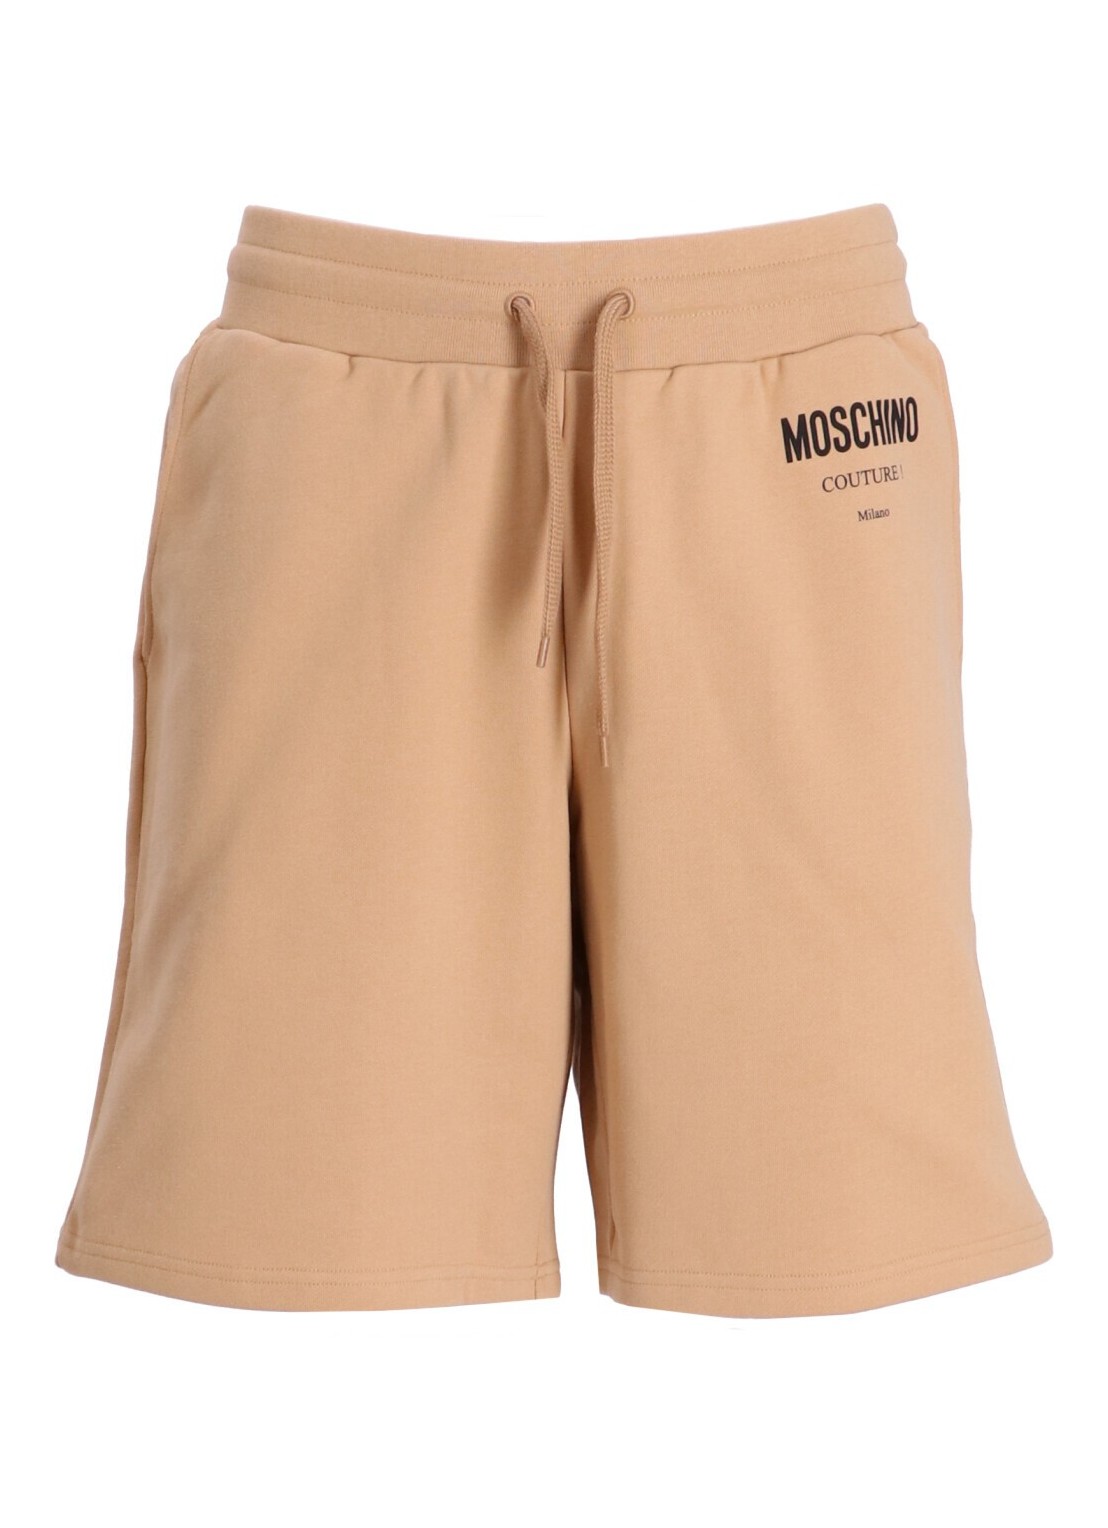 Pantalon corto moschino couture short pant man trousers 03075228 a1018 talla 50
 